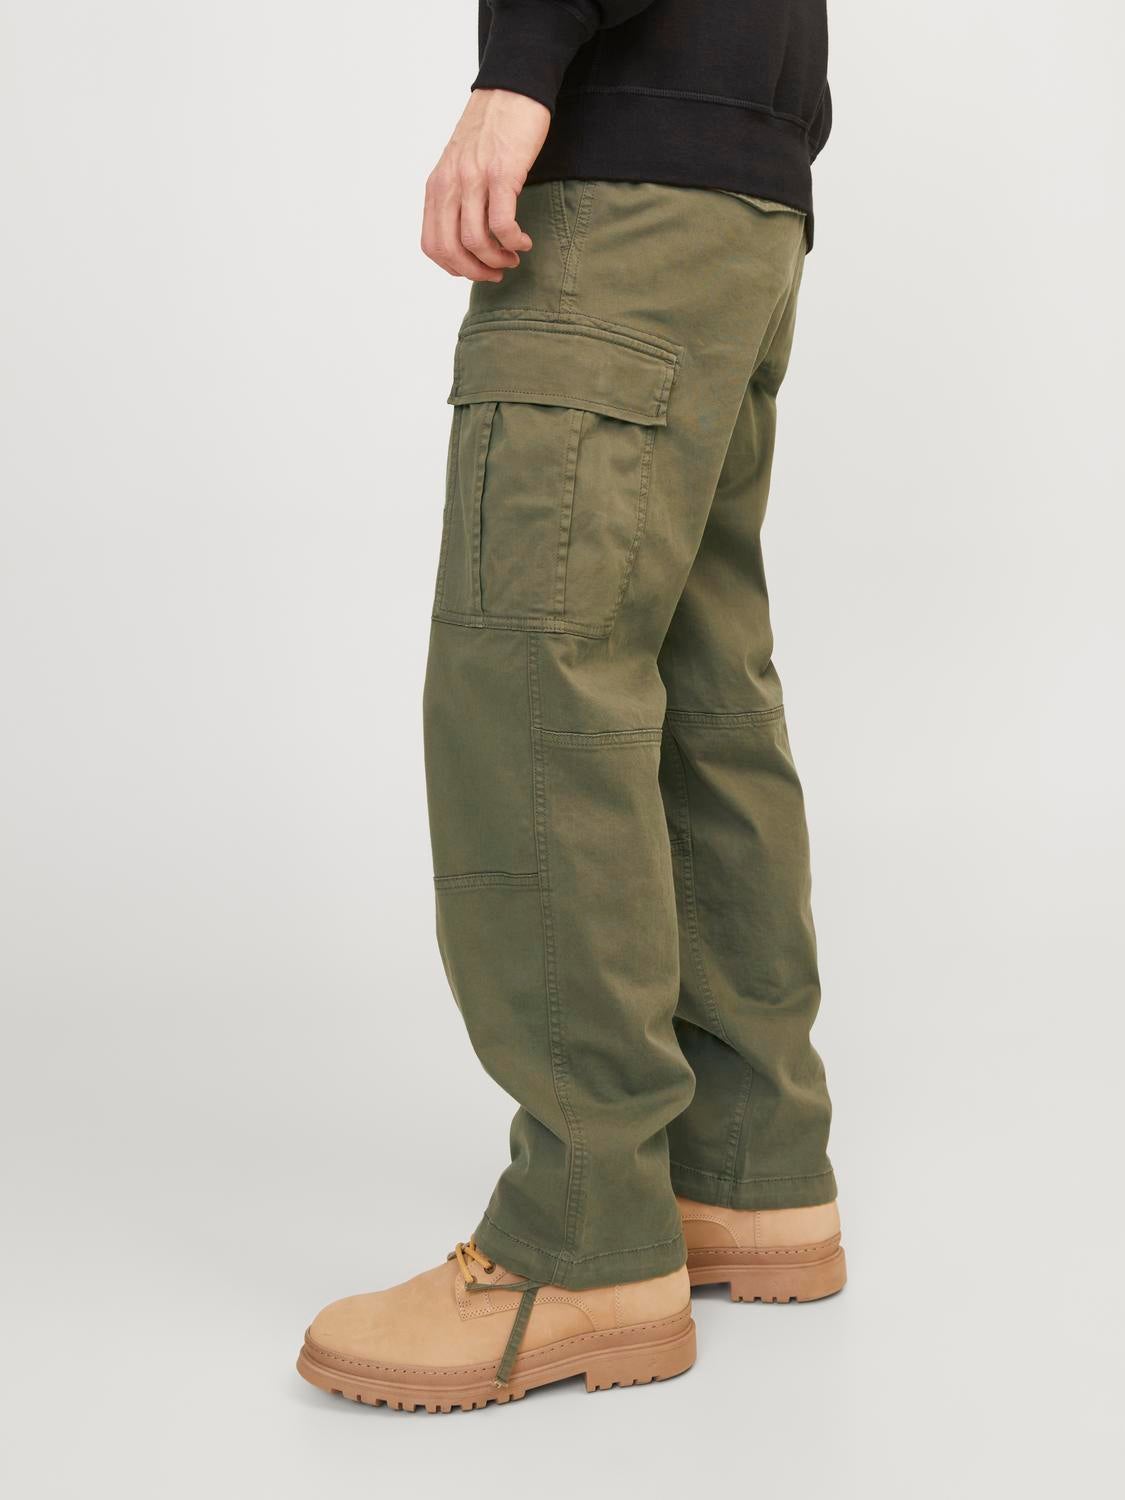 Buy MONTREZ Men Comfort Loose Fit Cotton Cargos Trousers Brown at Amazon.in